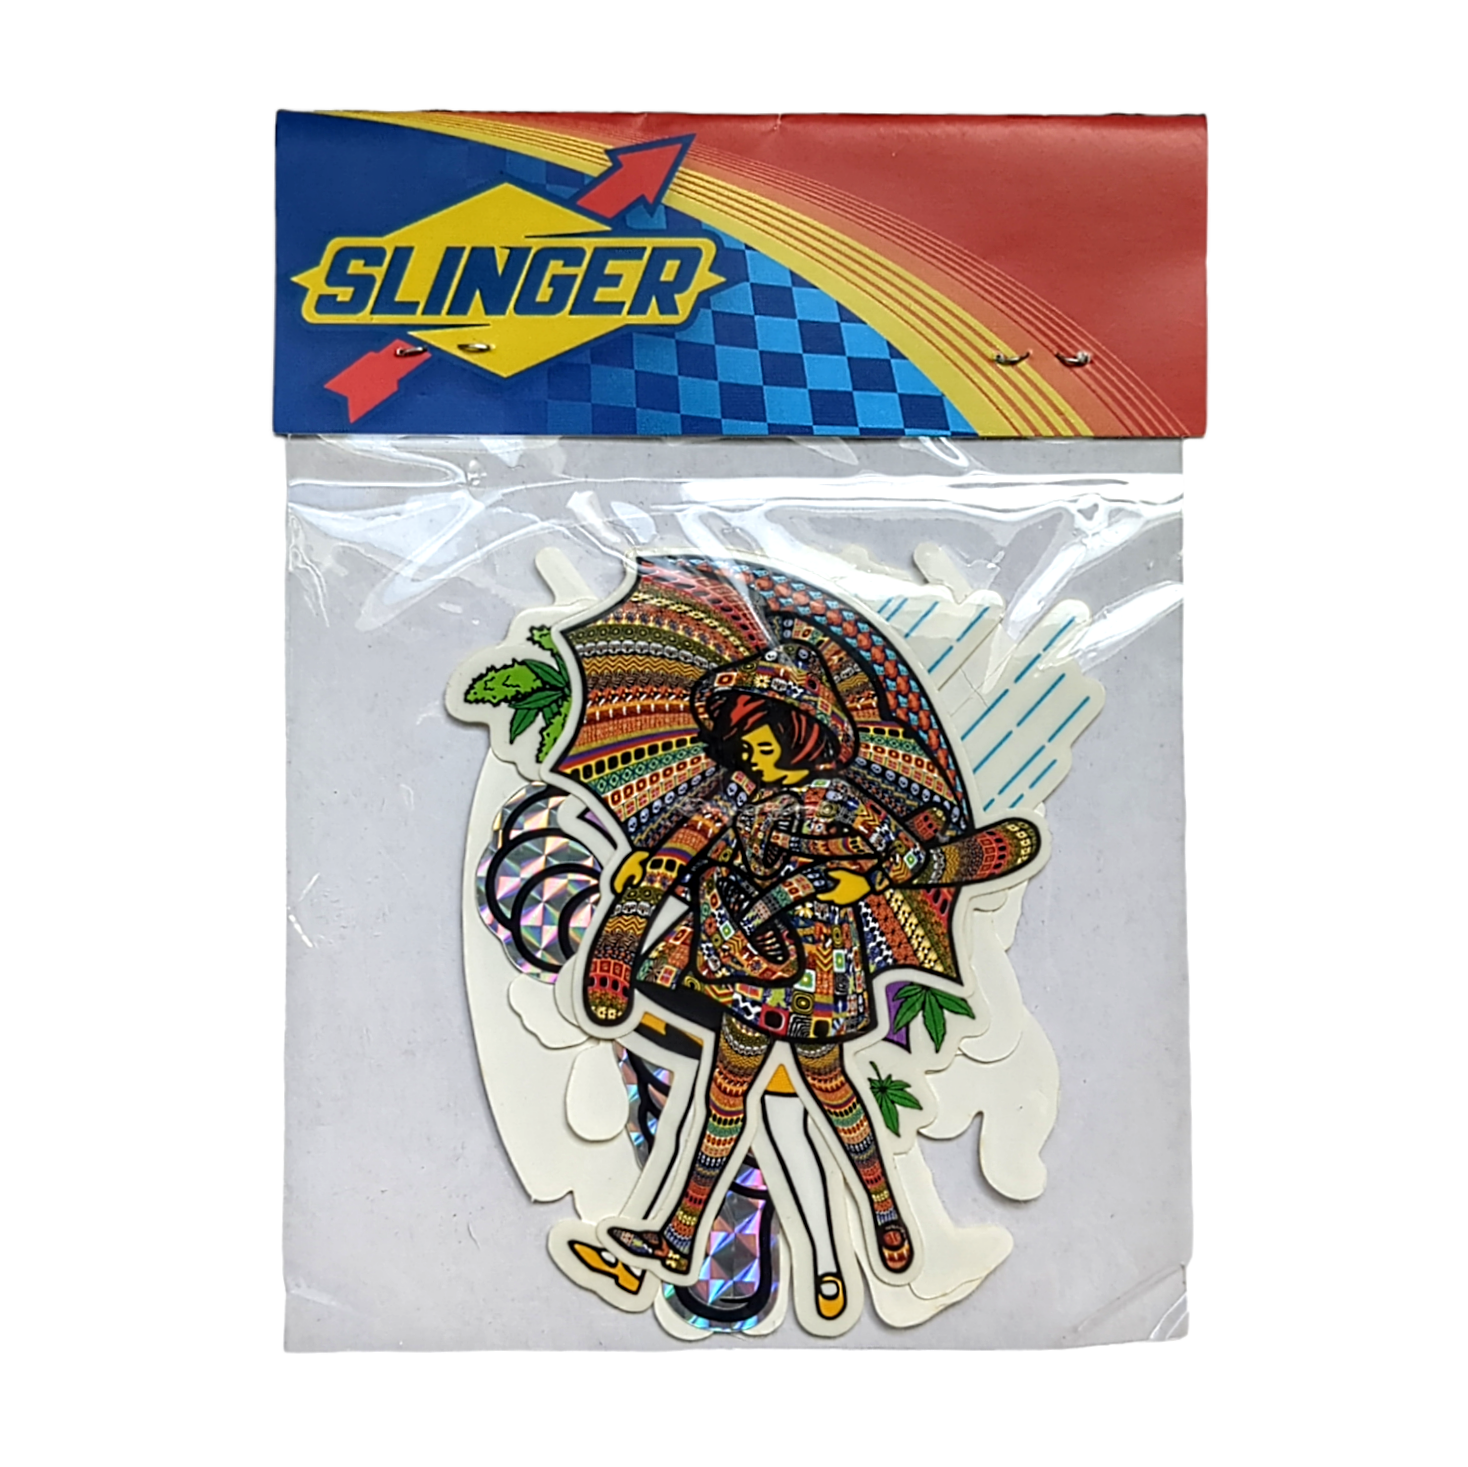 Slinger Sticker Pack  Includes (6) 4” vinyl die cut stickers with clear outline Featuring Spiritual Advisor, Honey Girl, Neon Mushroom Girl, Capn Crunk Girl, Emerald Girl & Lot Guru Foil Sticker